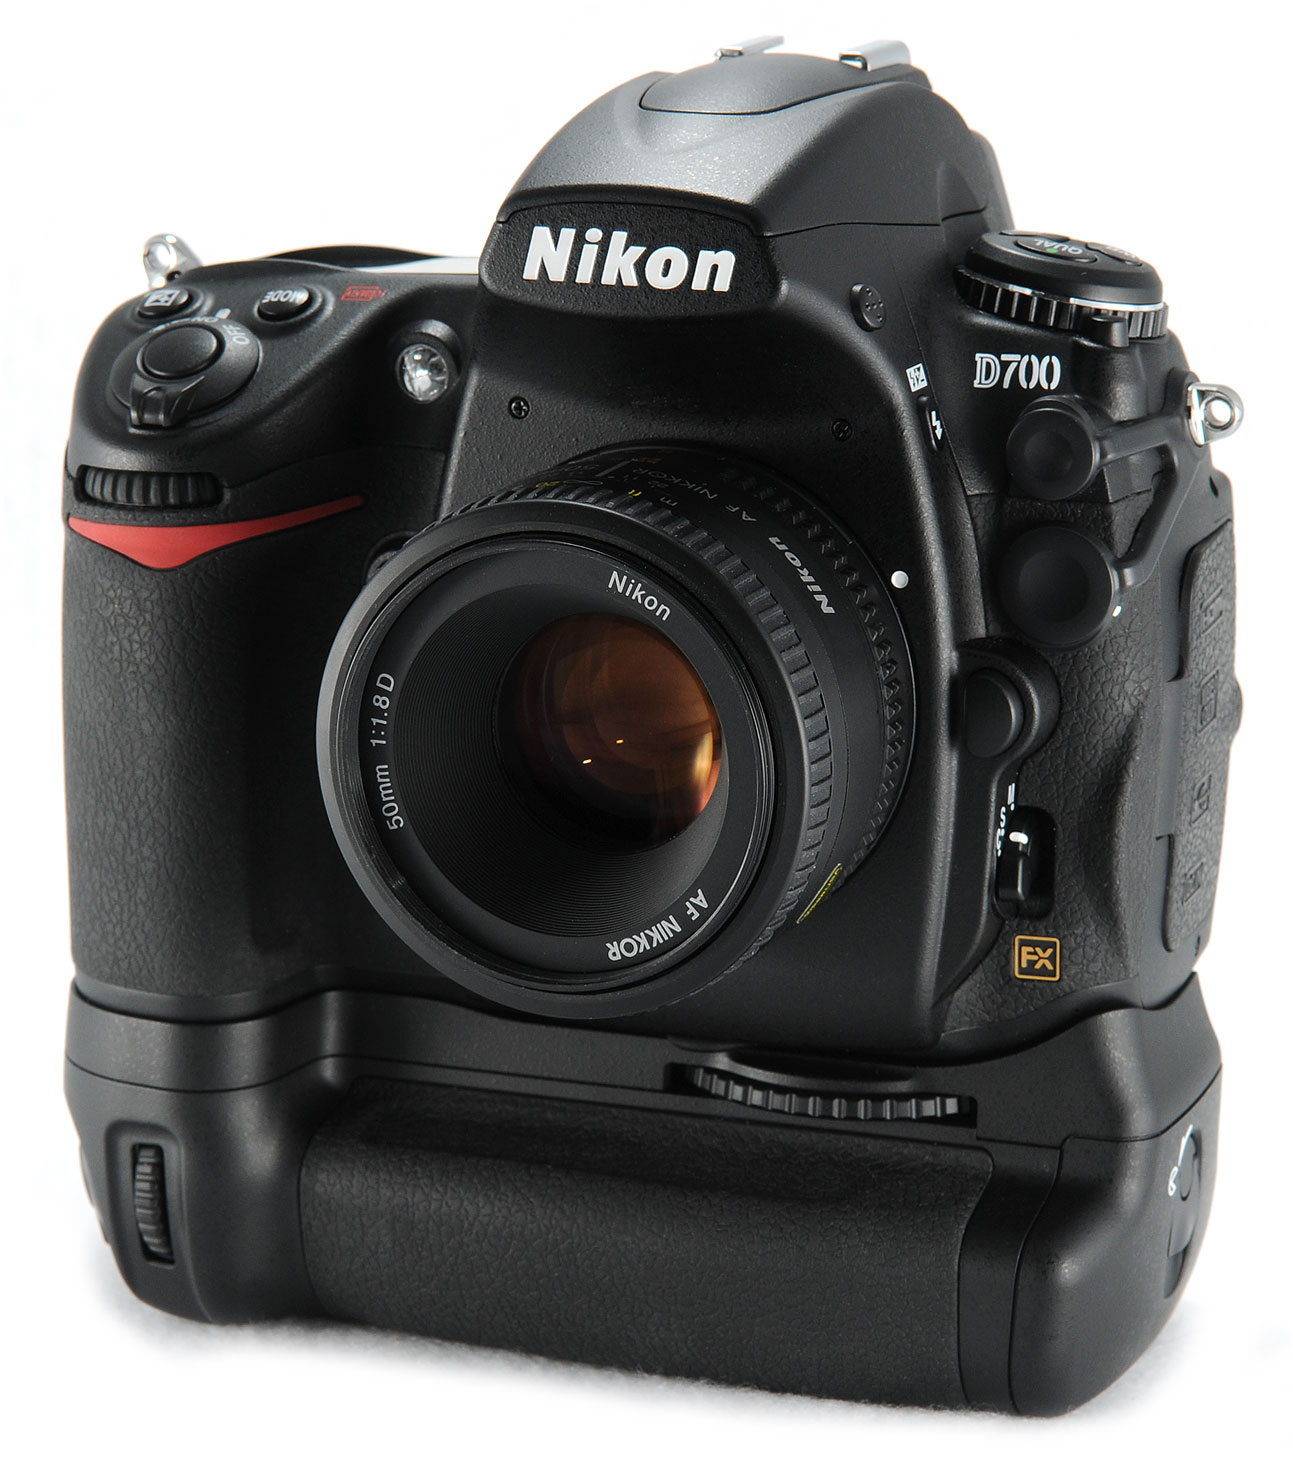 Nikon DSLR Camera Reviews: Nikon D700 12.1MP FX-Format CMOS Digital SLR